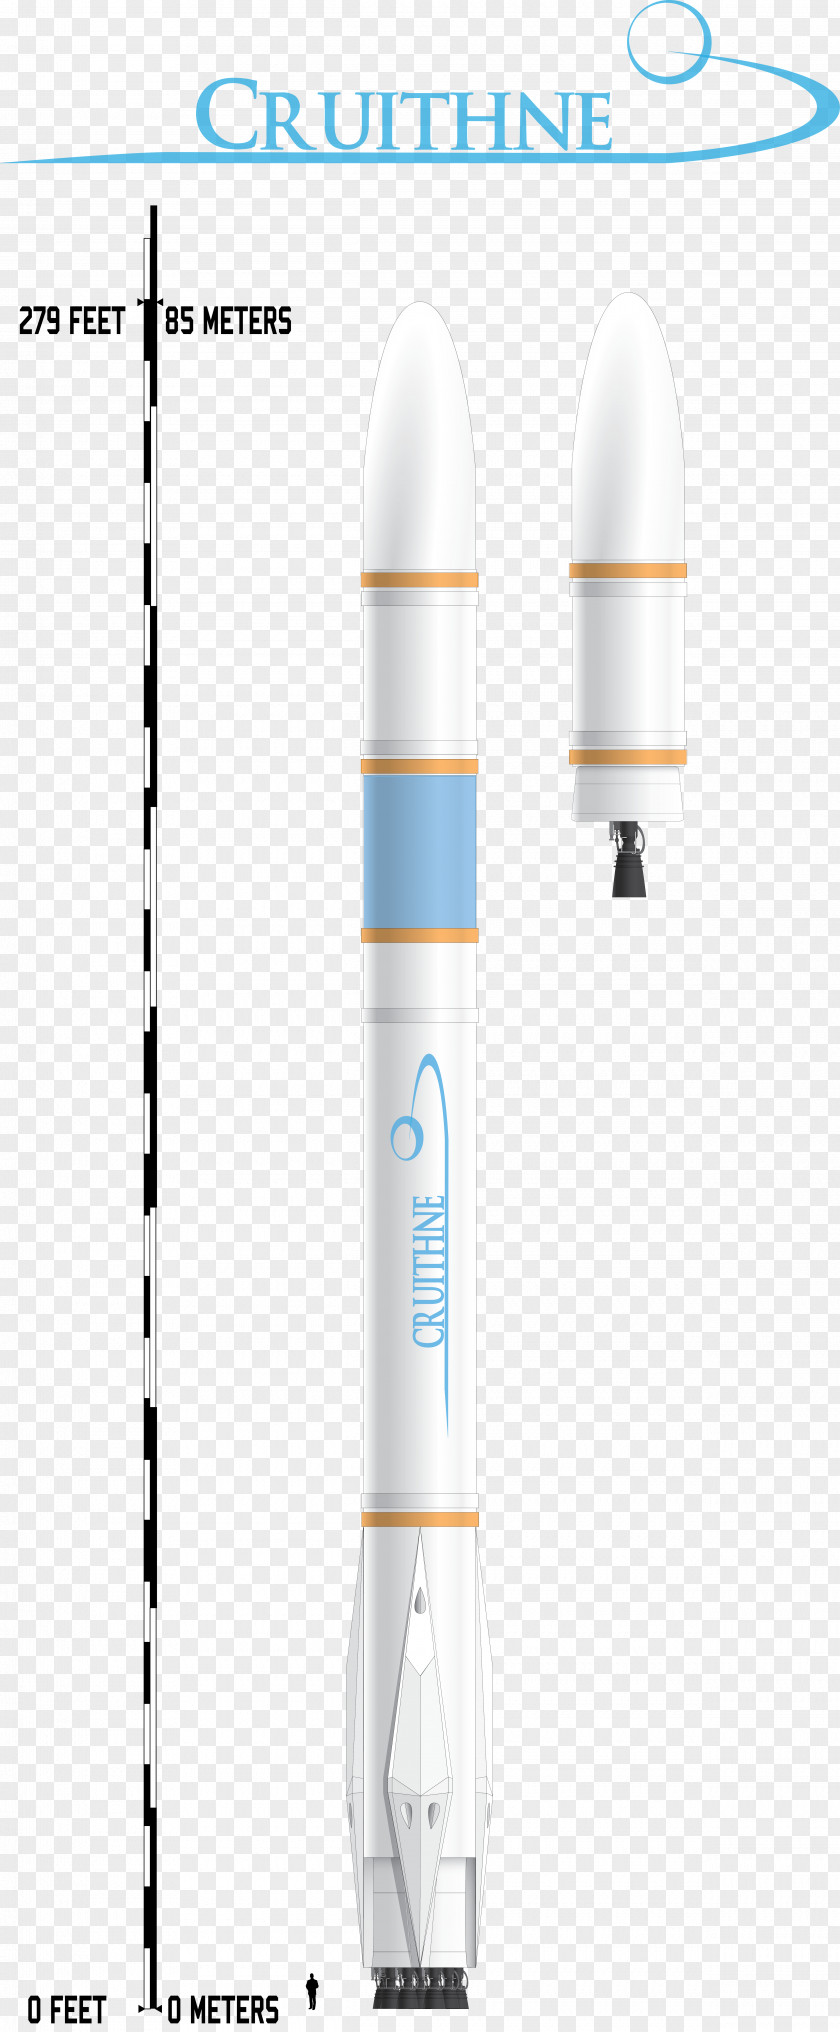 Launch Vehicle Rocket Artist PNG